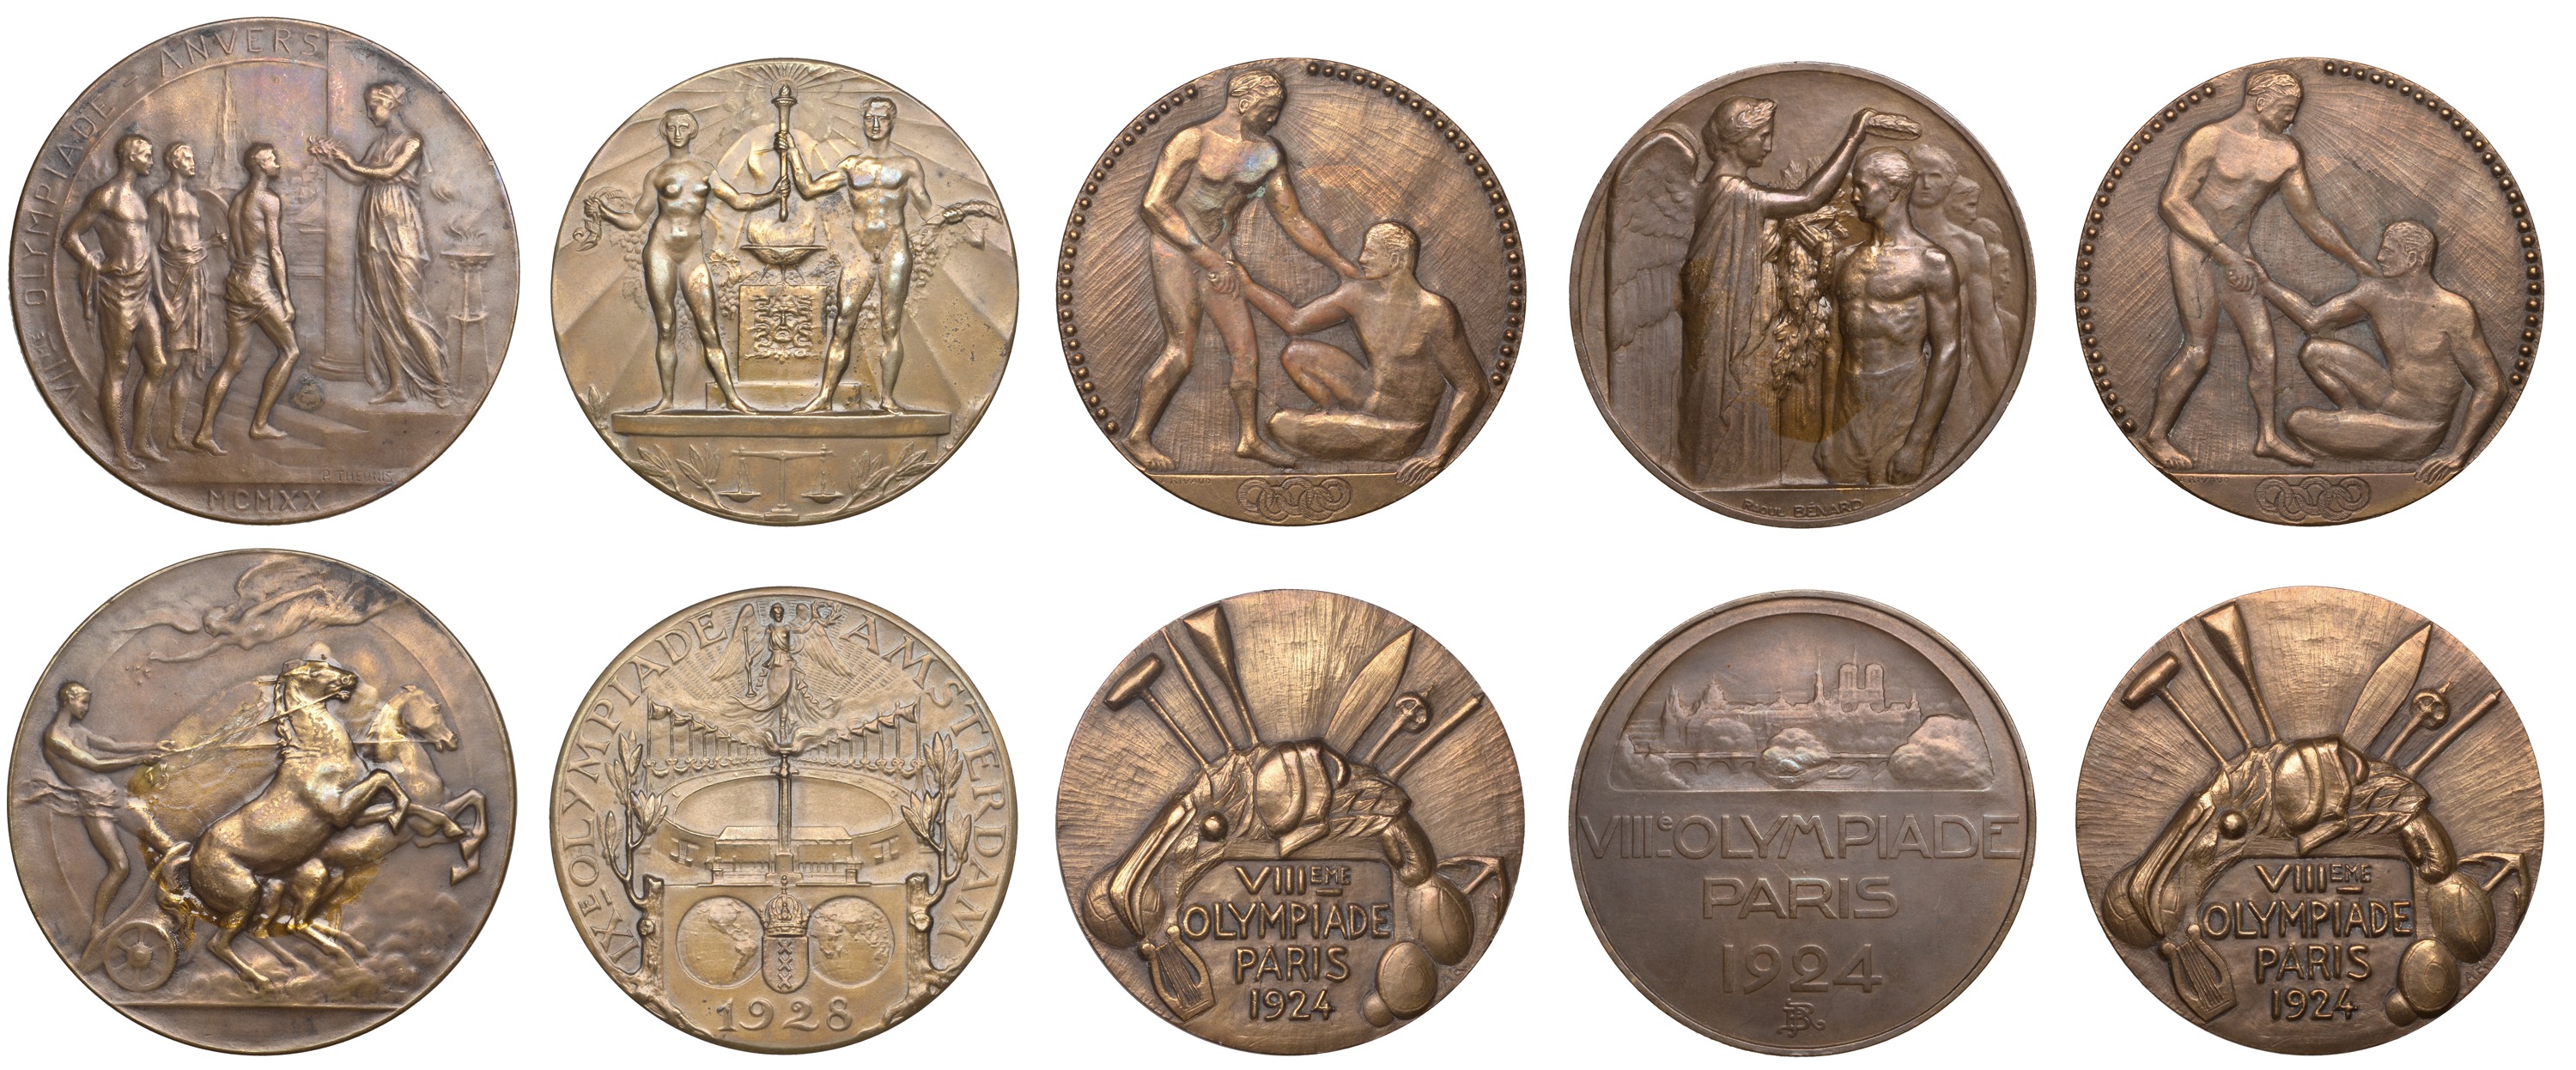 London Athletic Club, a gold award medal by J. Daffern & Co, named (Public Schools Champp.,... - Image 2 of 7